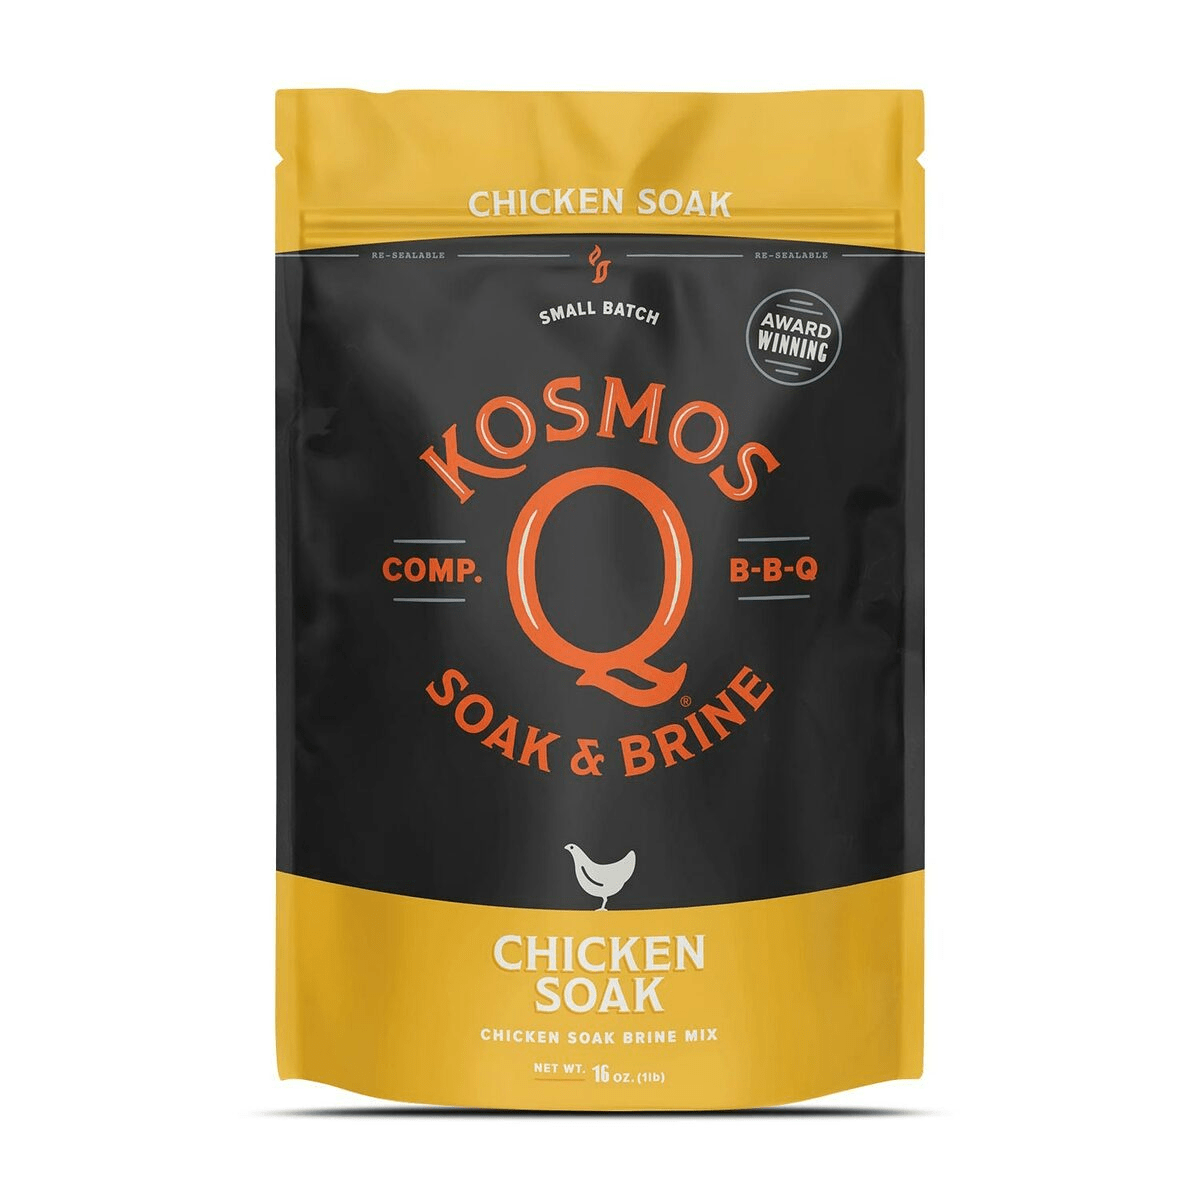 Kosmos Q Rubs, Sauces & Brines Copy of Kosmos Q Chicken Soak